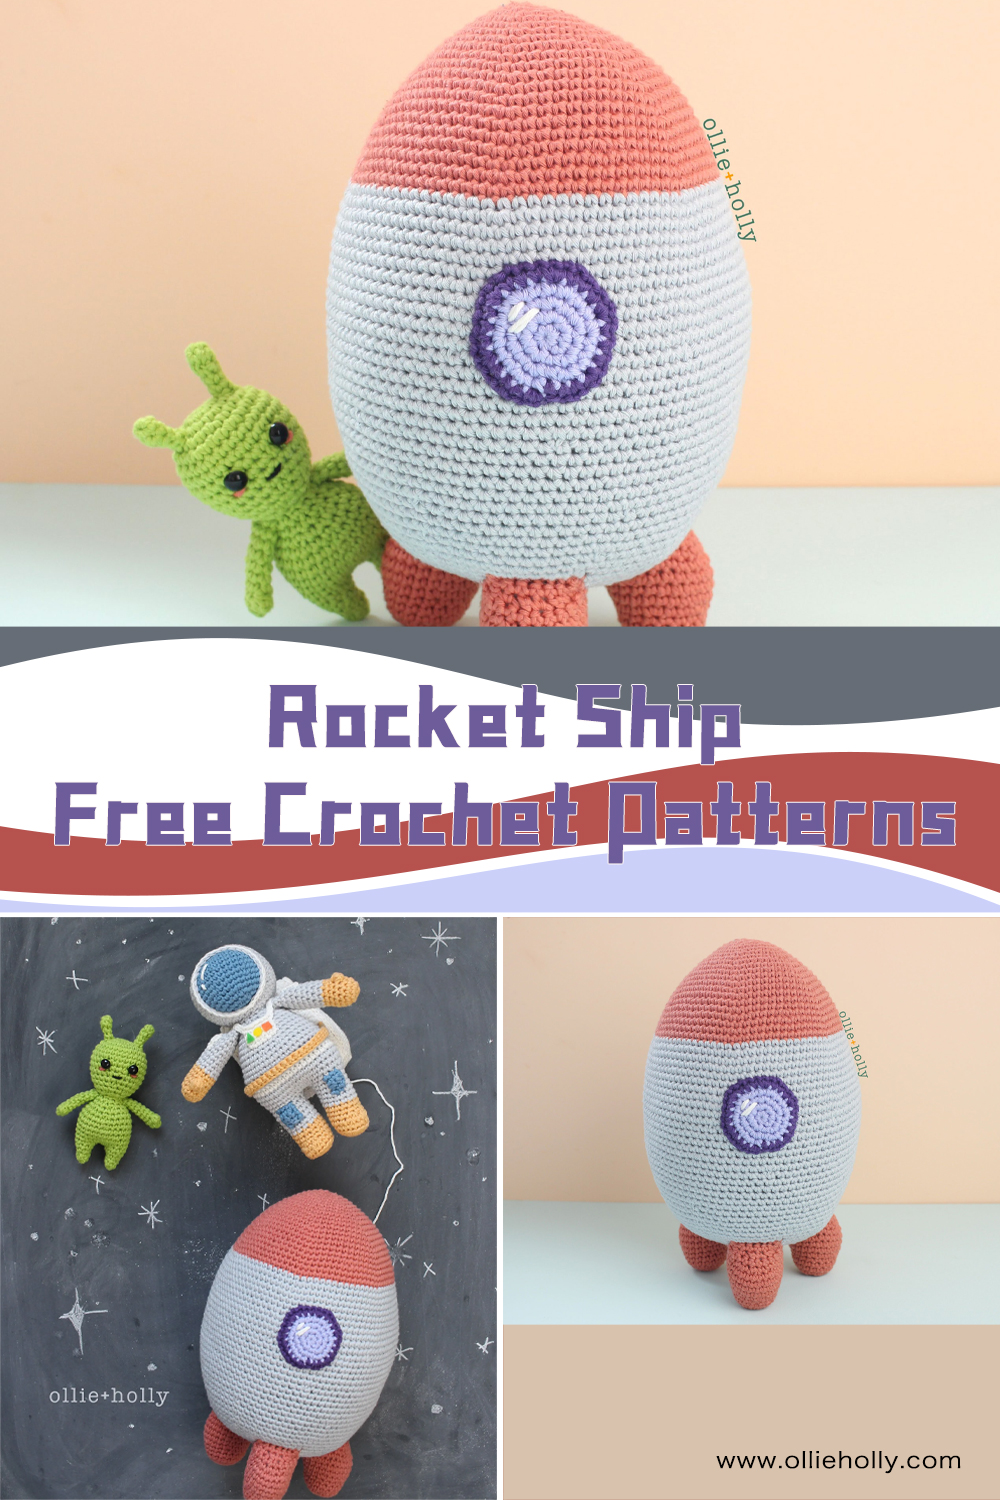 FREE Rocket Ship Crochet Patterns